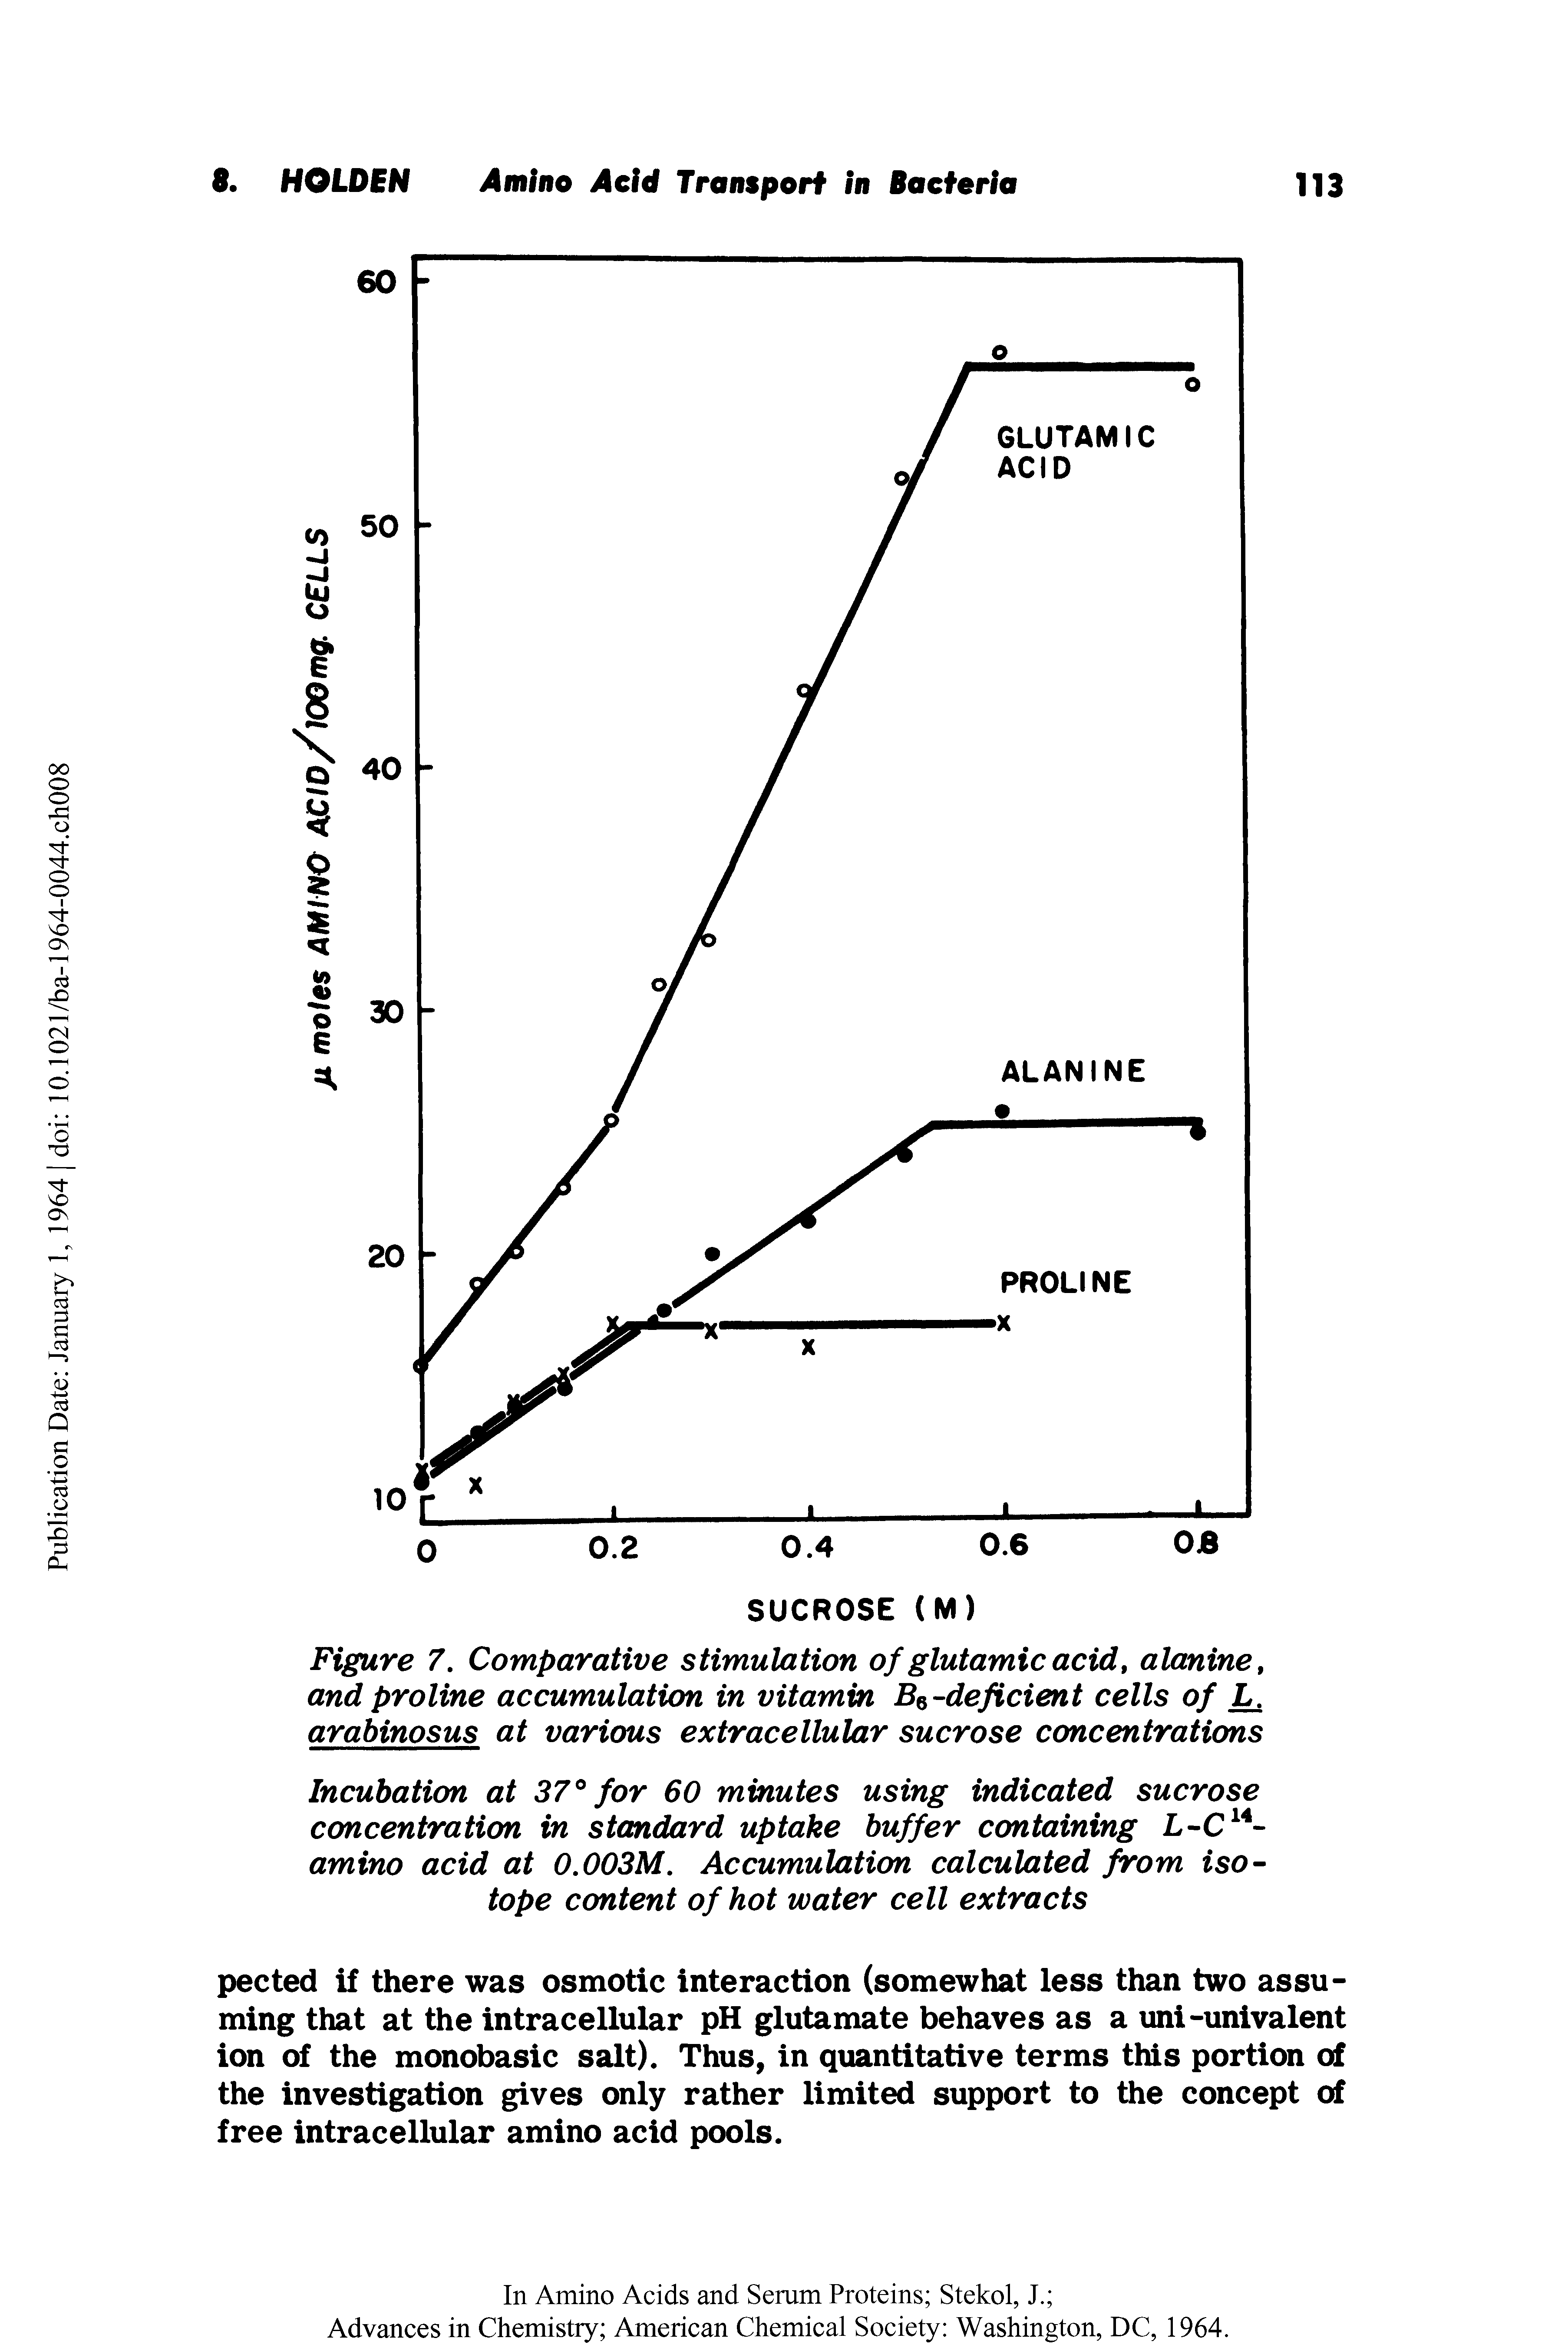 Figure 7. Comparative stimulation of glutamic acid, alanine, and proline accumulation in vitamin B6-deficient cells of L. arabinosus at various extracellular sucrose concentrations...